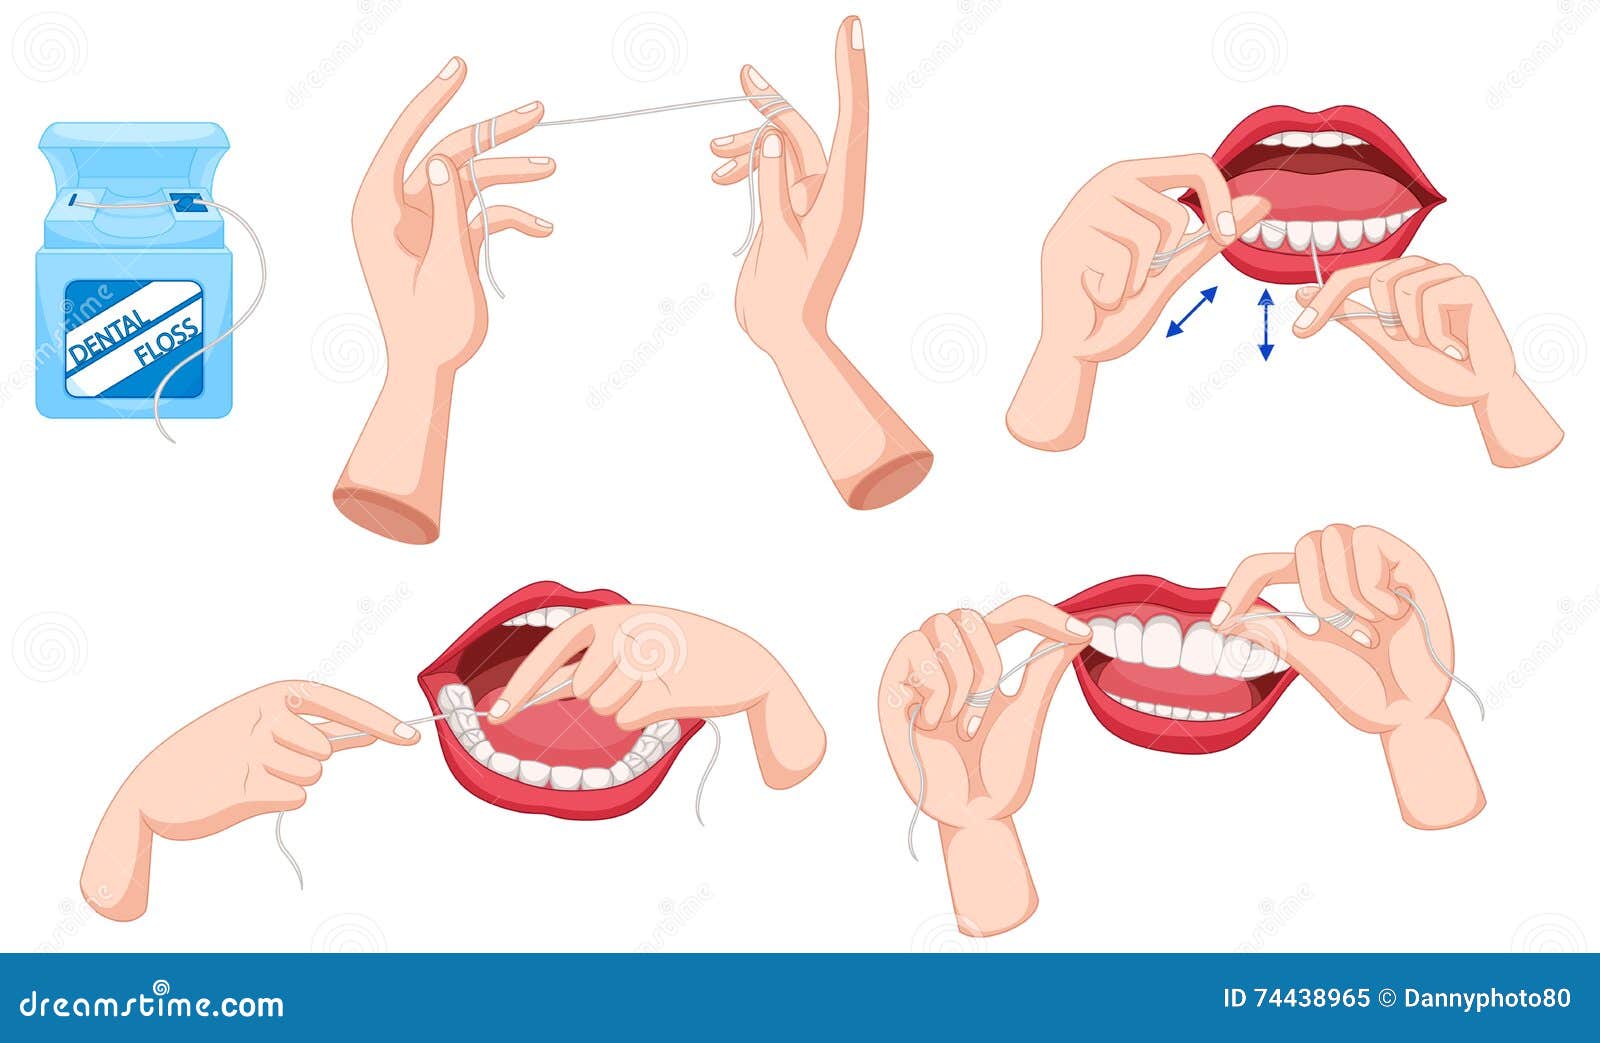 https://thumbs.dreamstime.com/z/set-dental-floss-how-to-use-illustration-74438965.jpg